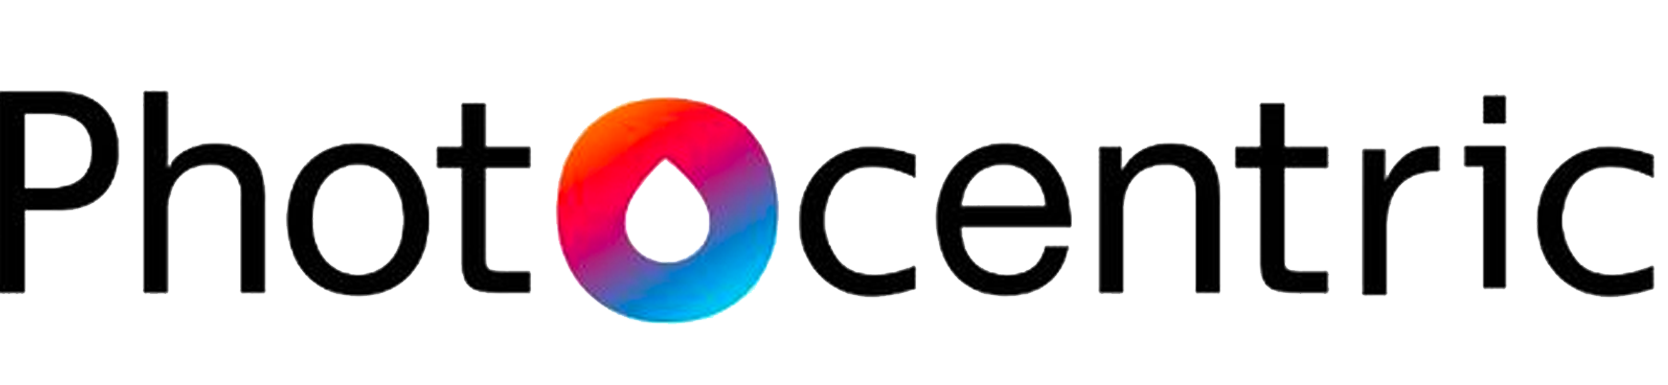 Photocentric_logo Logo